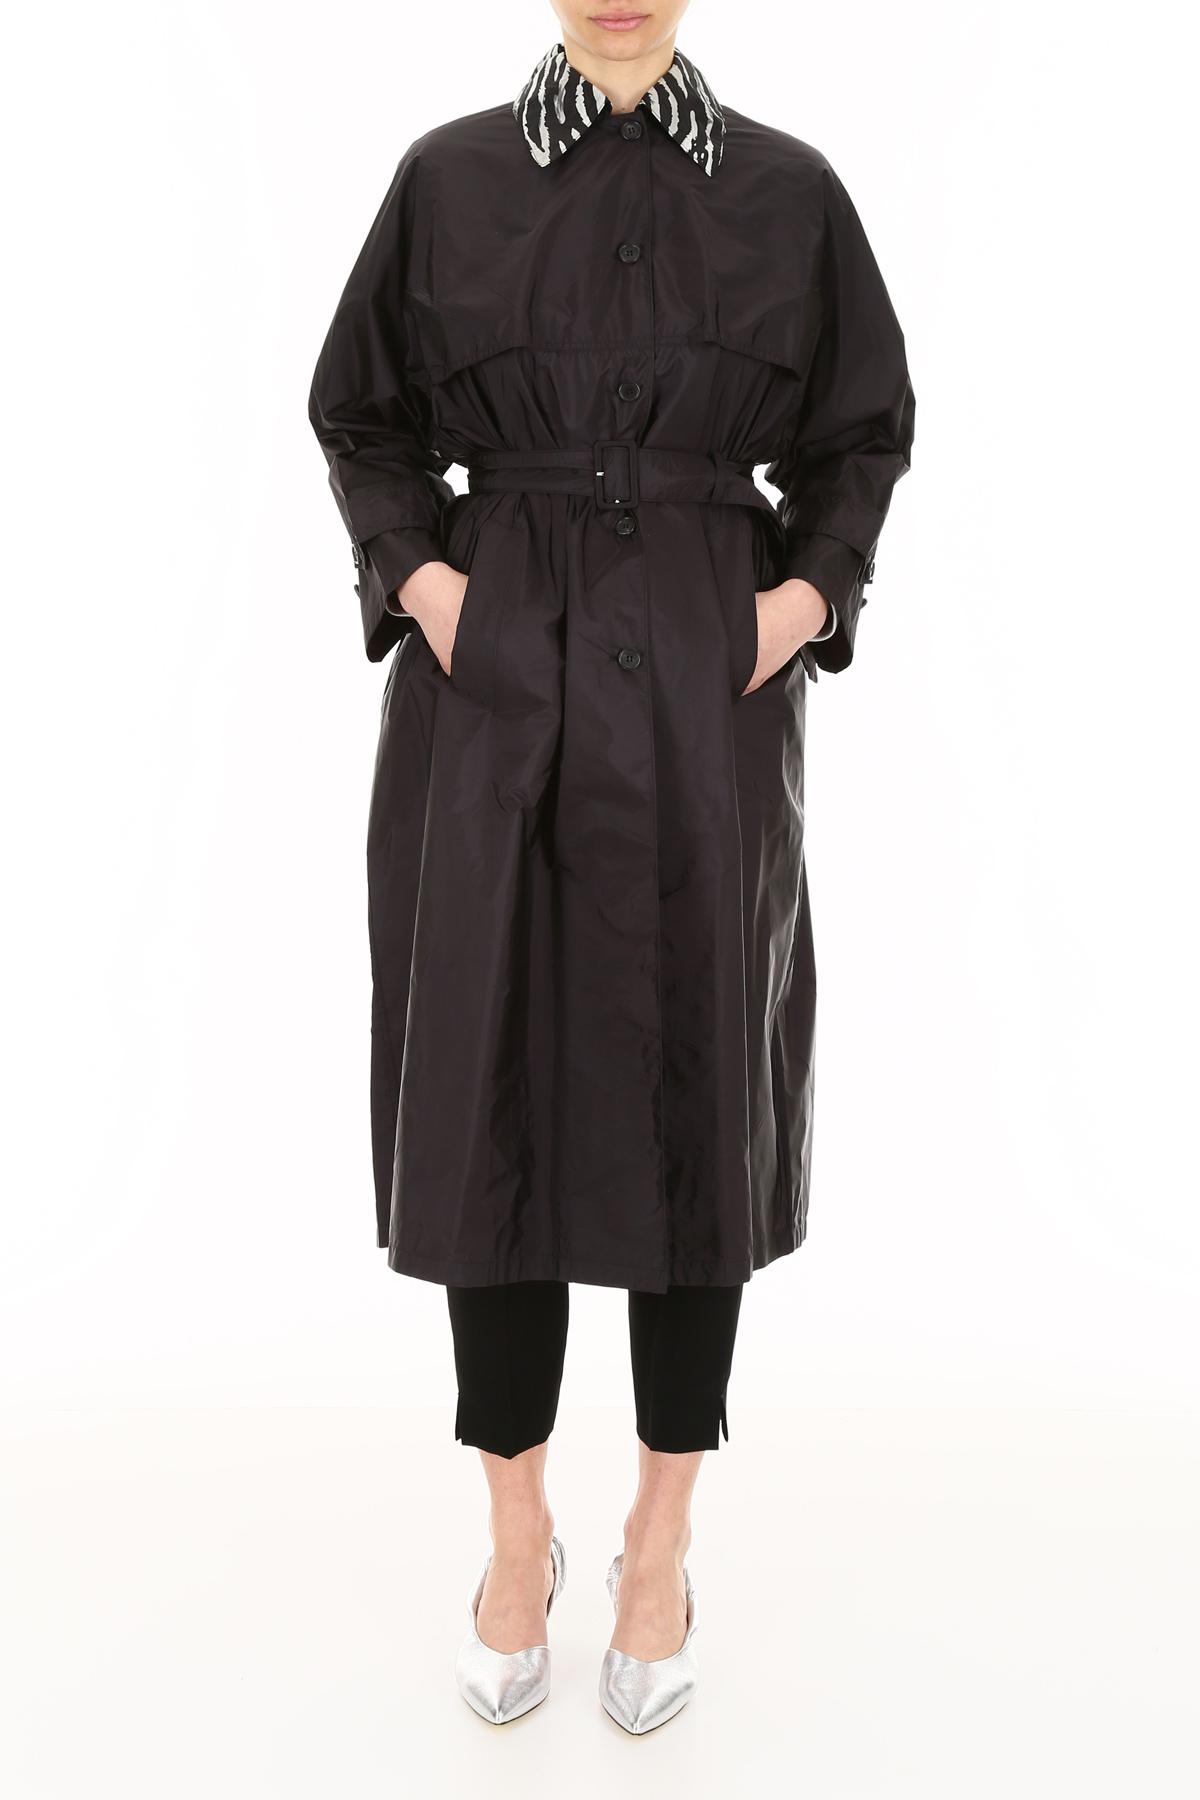 Prada Lightweight Nylon Trench Coat in Black | Lyst